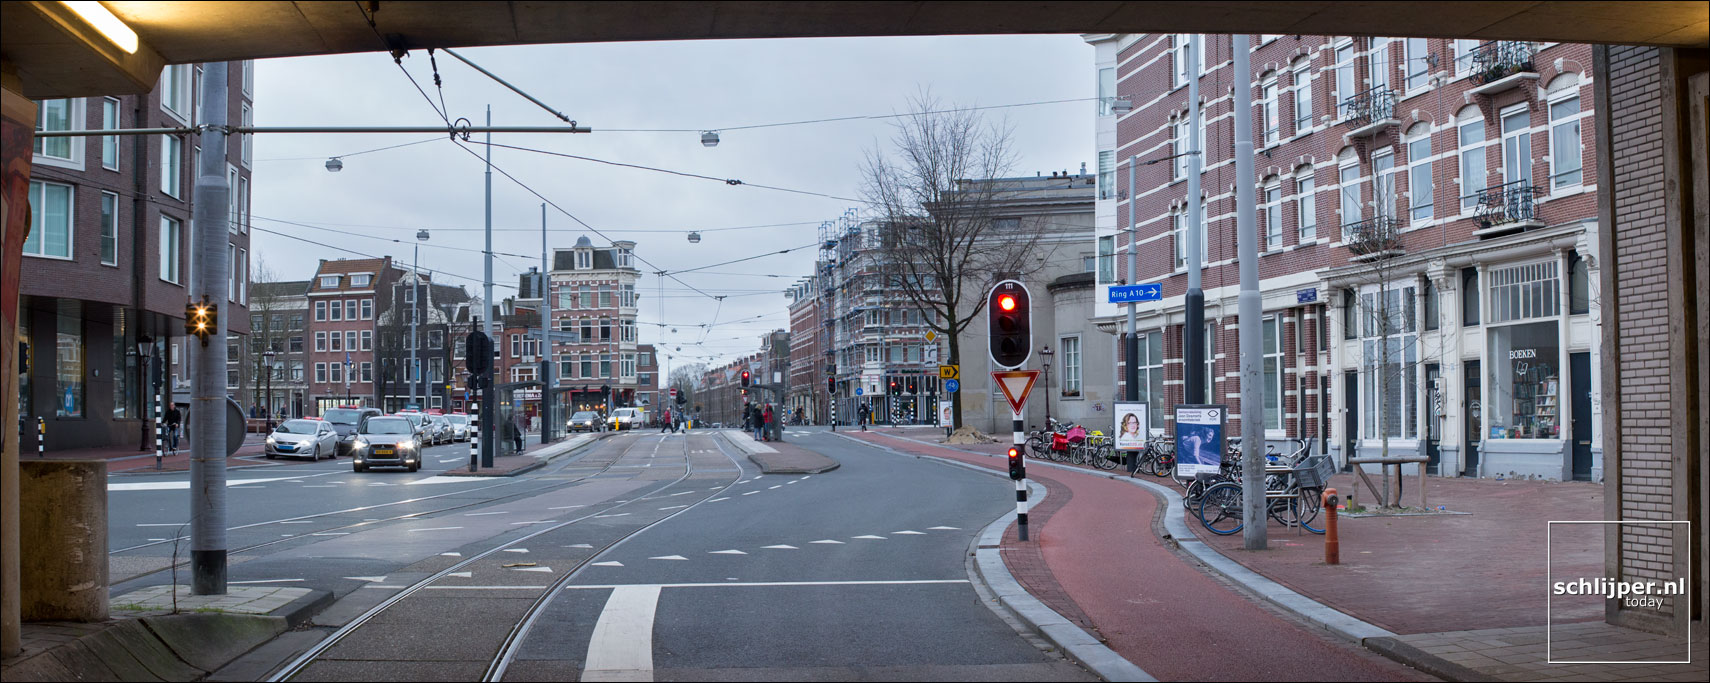 Nederland, Amsterdam, 22 december 2014